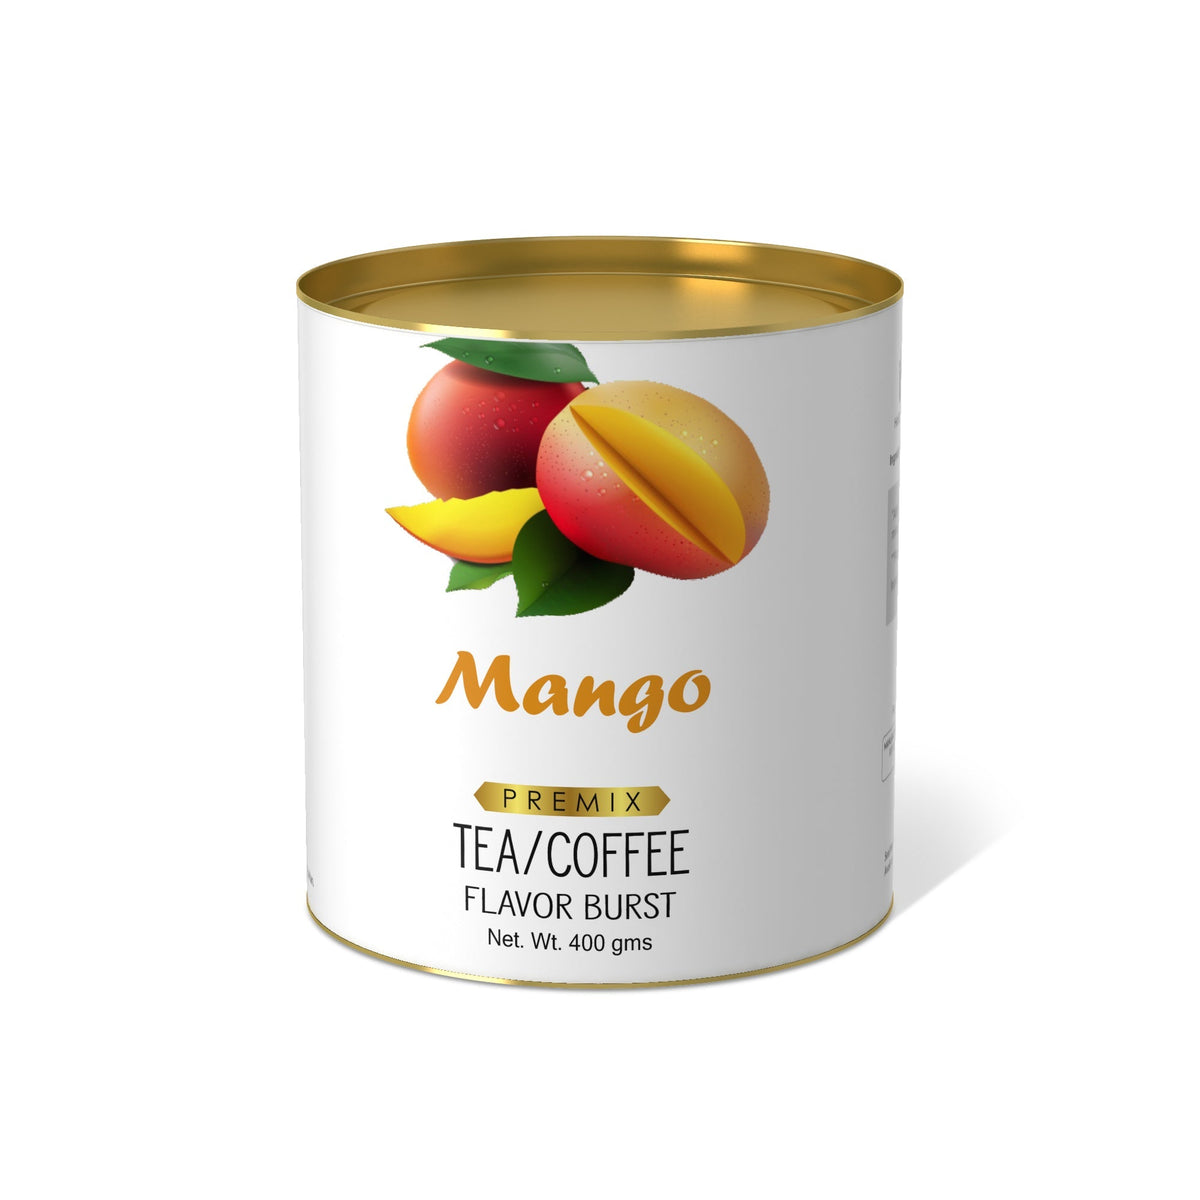 Mango Flavor Burst - 400 gms